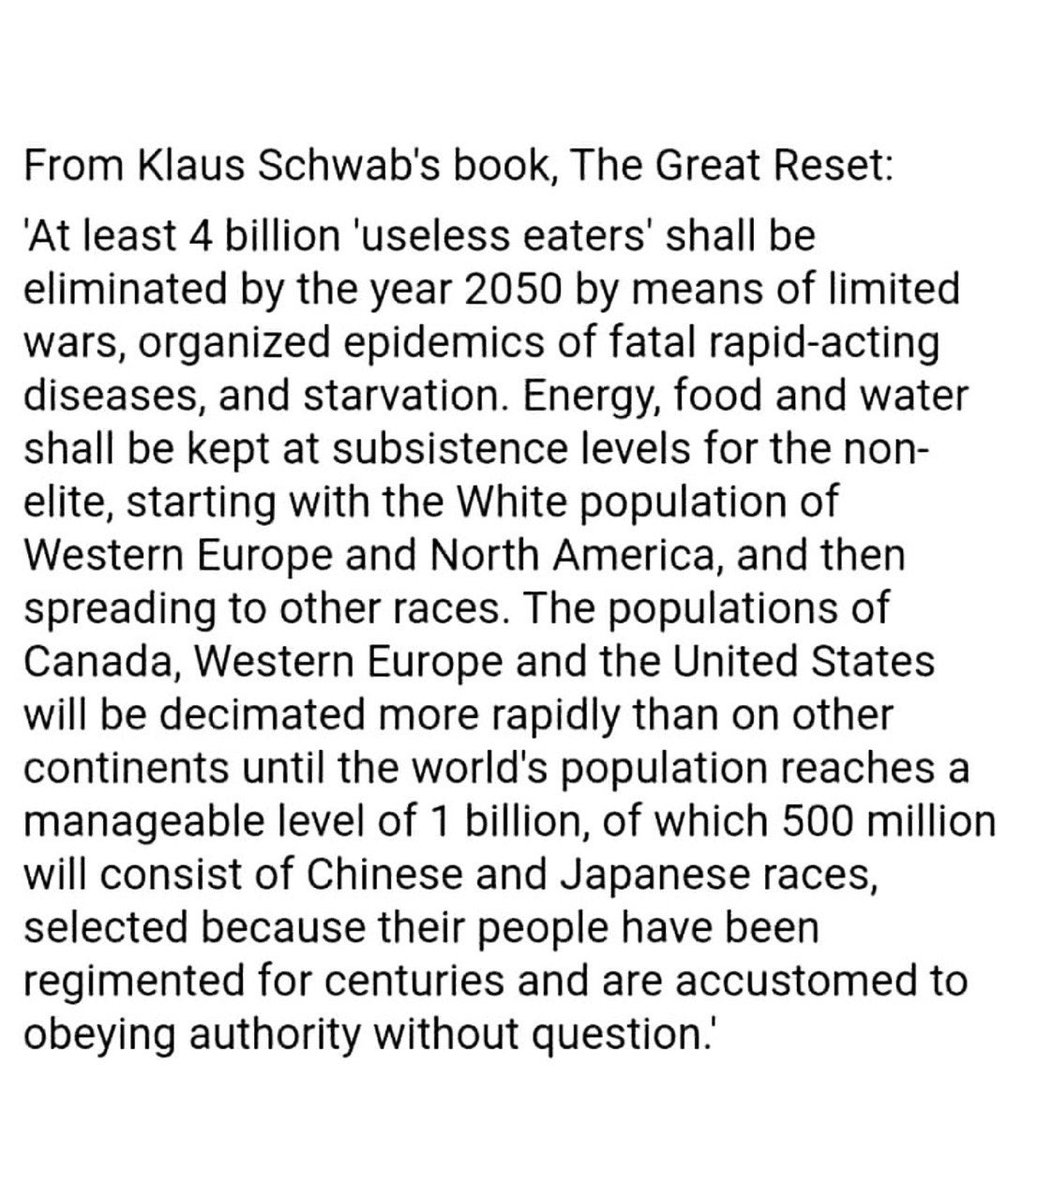 From Klaus Schwab’s book, The Great Reset..